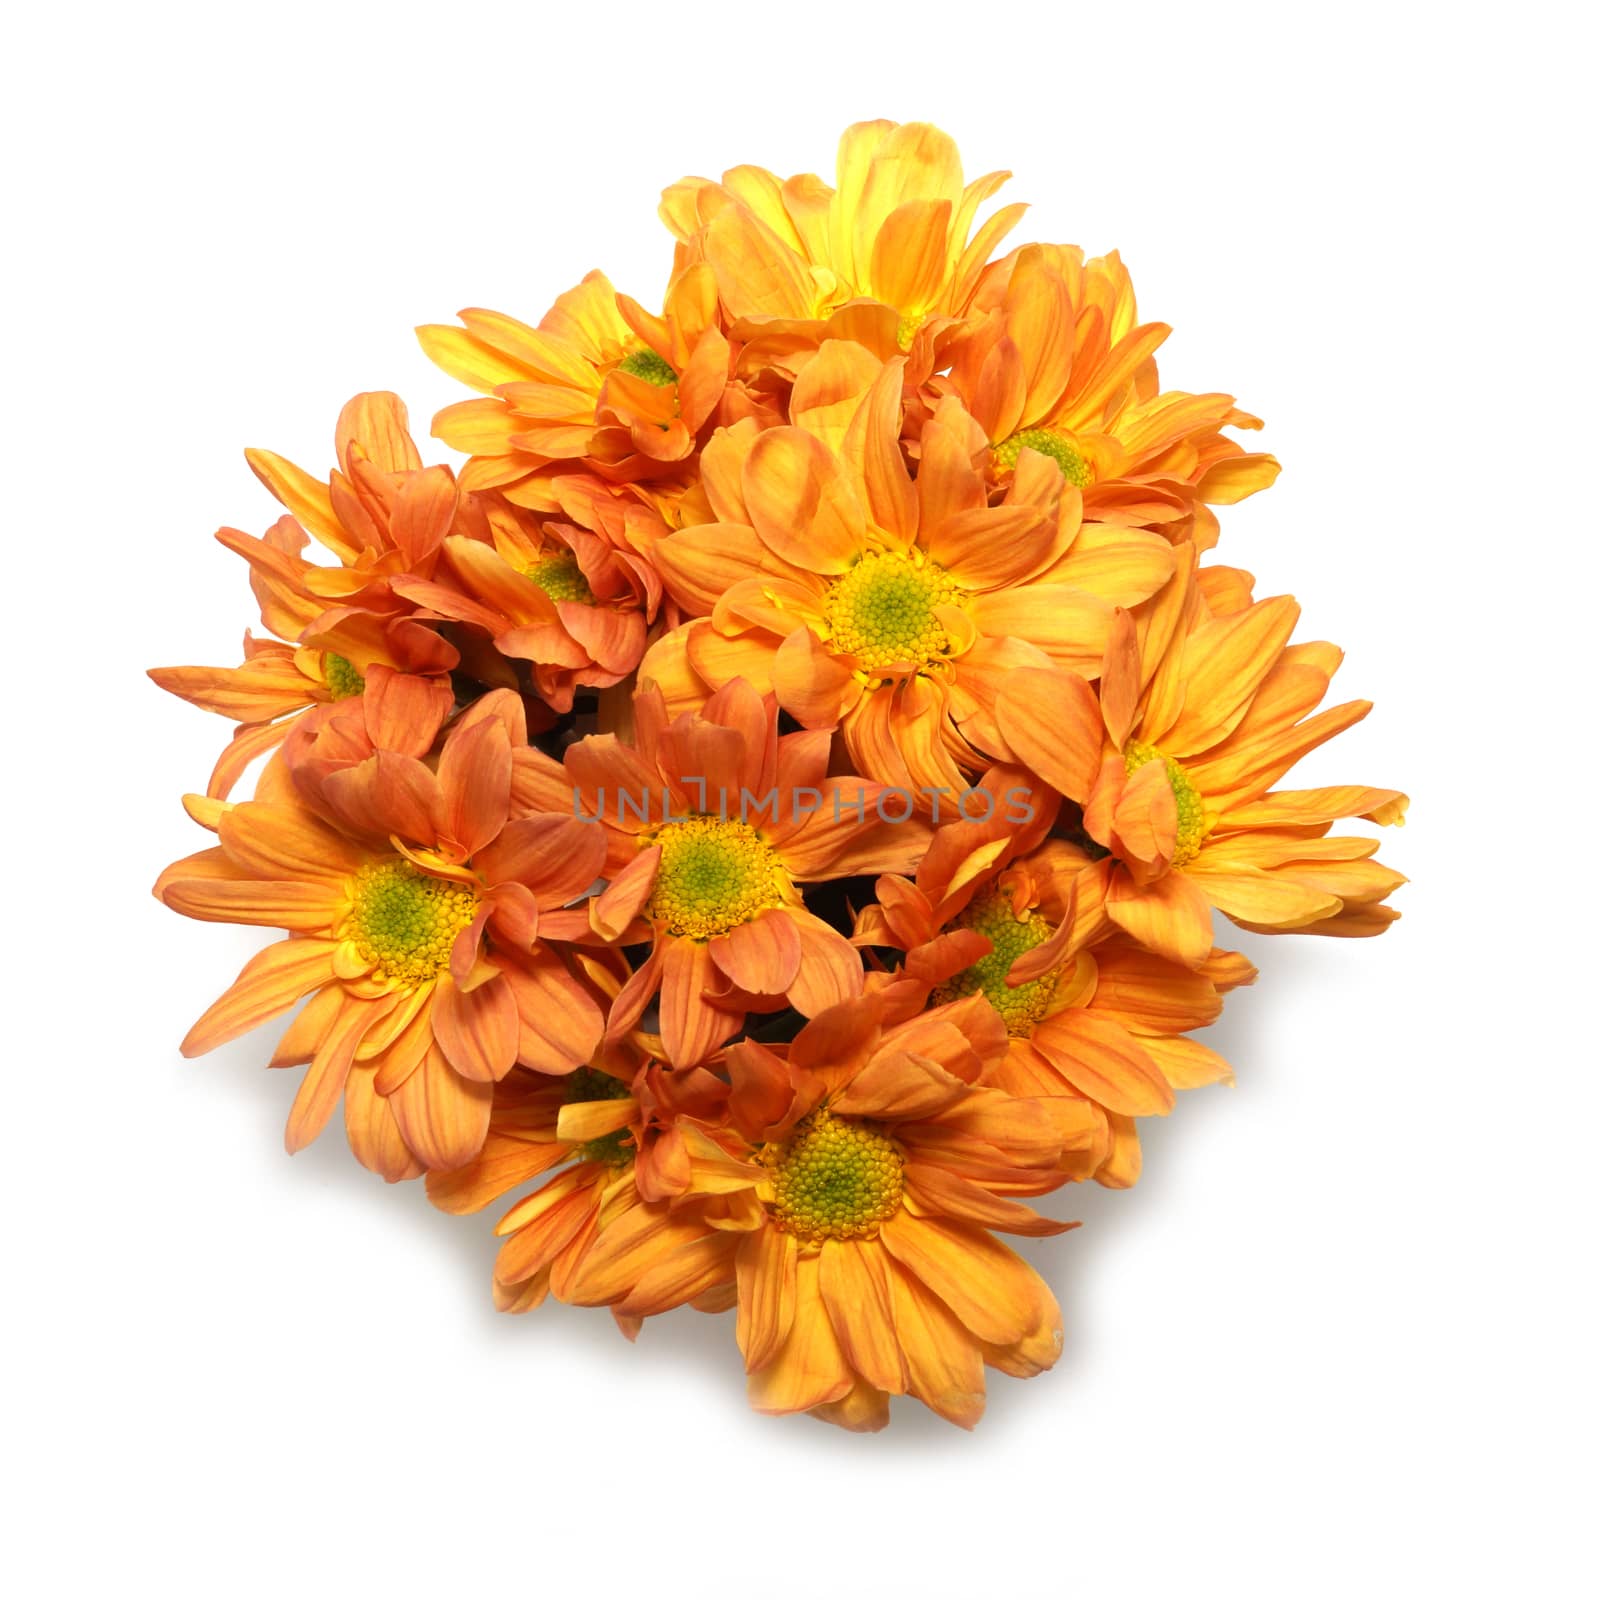 orange chrysanthemum on white background